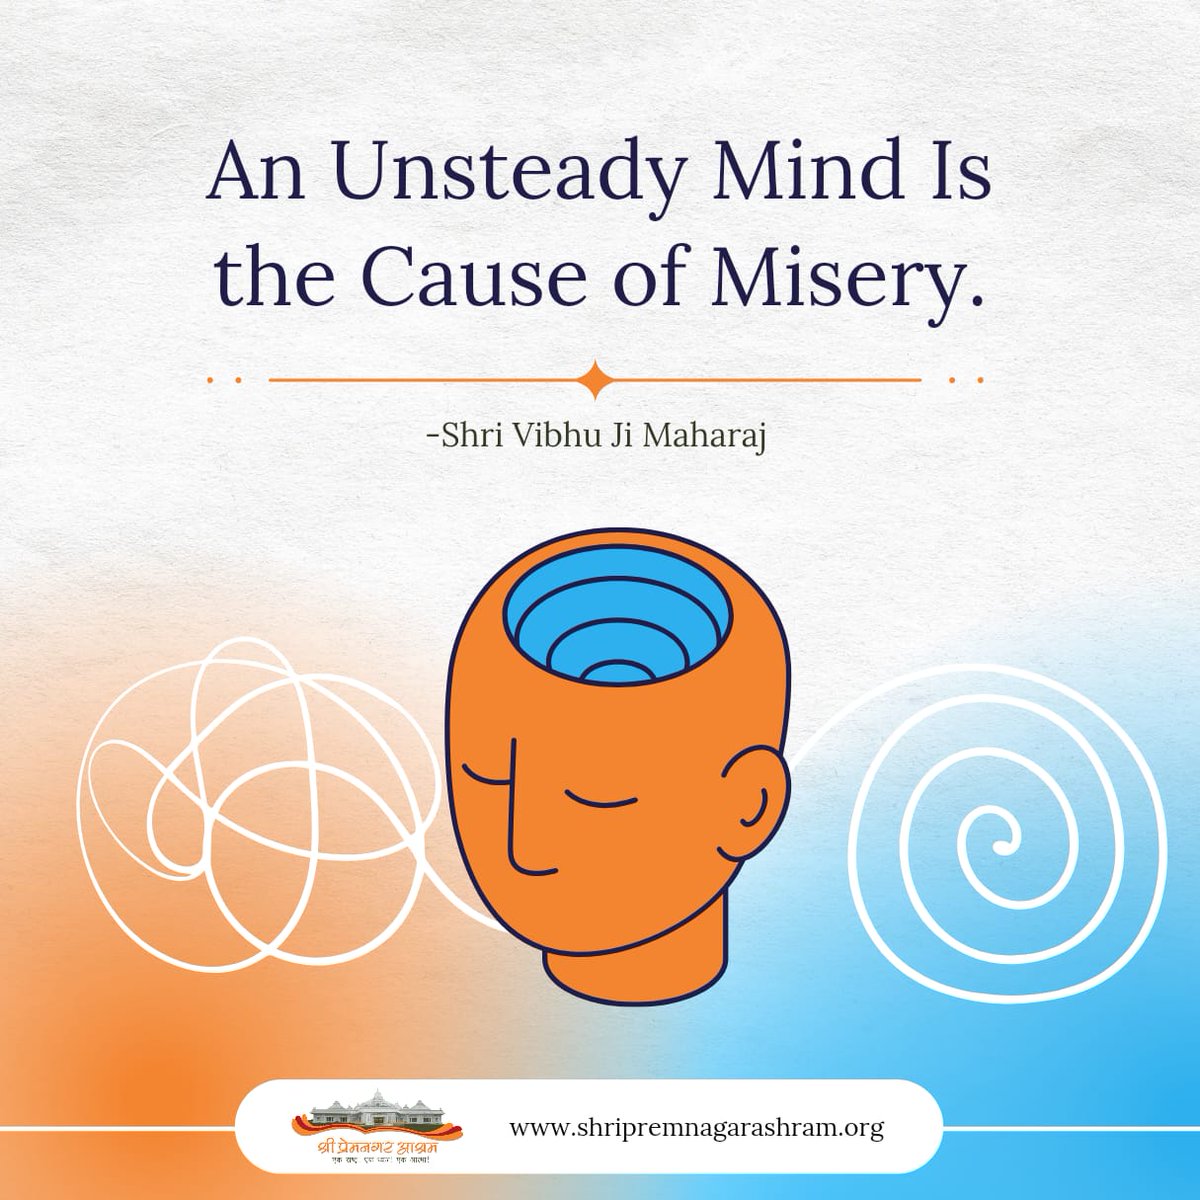 An Unsteady Mind Is the Cause of Misery.

-Shri Vibhu Ji Maharaj
#likesforlike #ManavDharam #dailypost #shripremnagarashram #spiritualpost #spirituality #spiritualawakening #spiritualgrowth #shrivibhujimaharaj